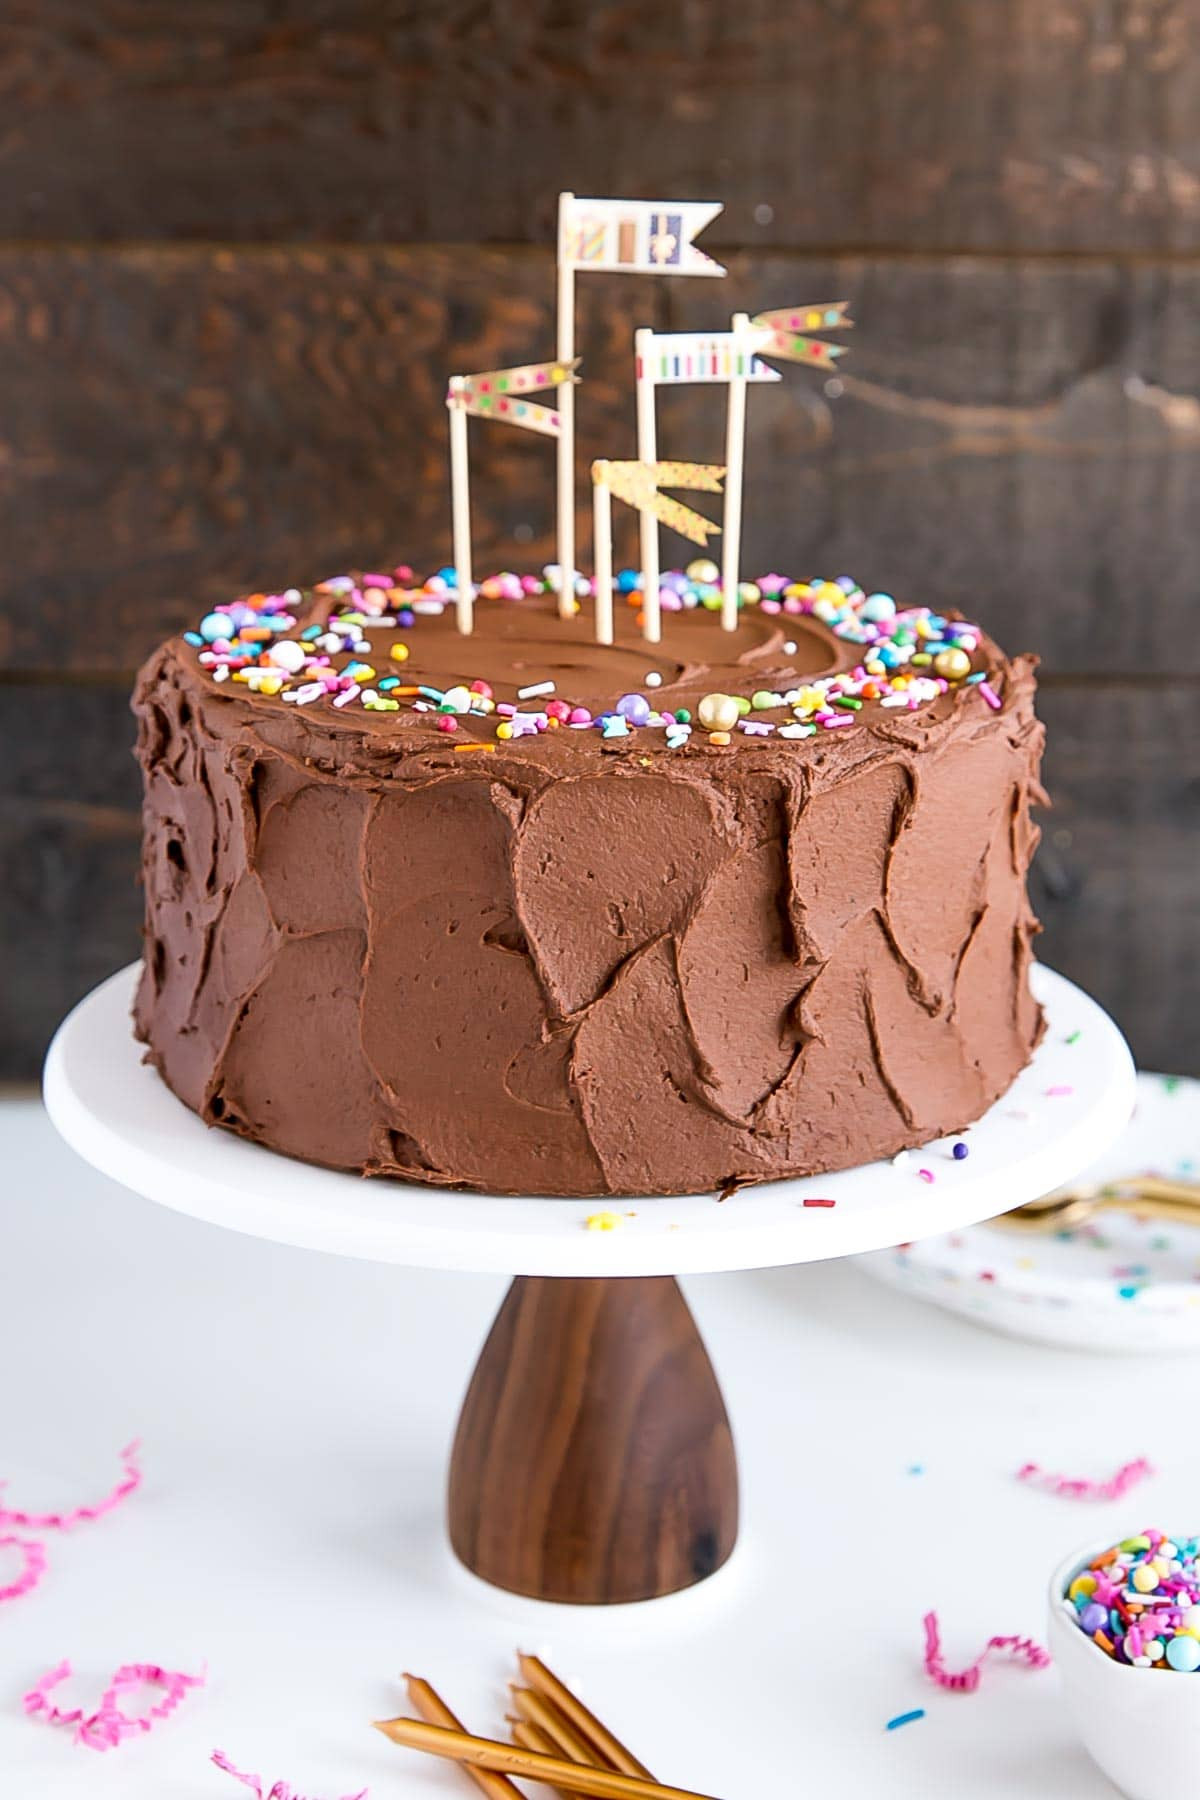 Images Of Birthday Cakes
 18 Fun Birthday Cake Inspired Desserts